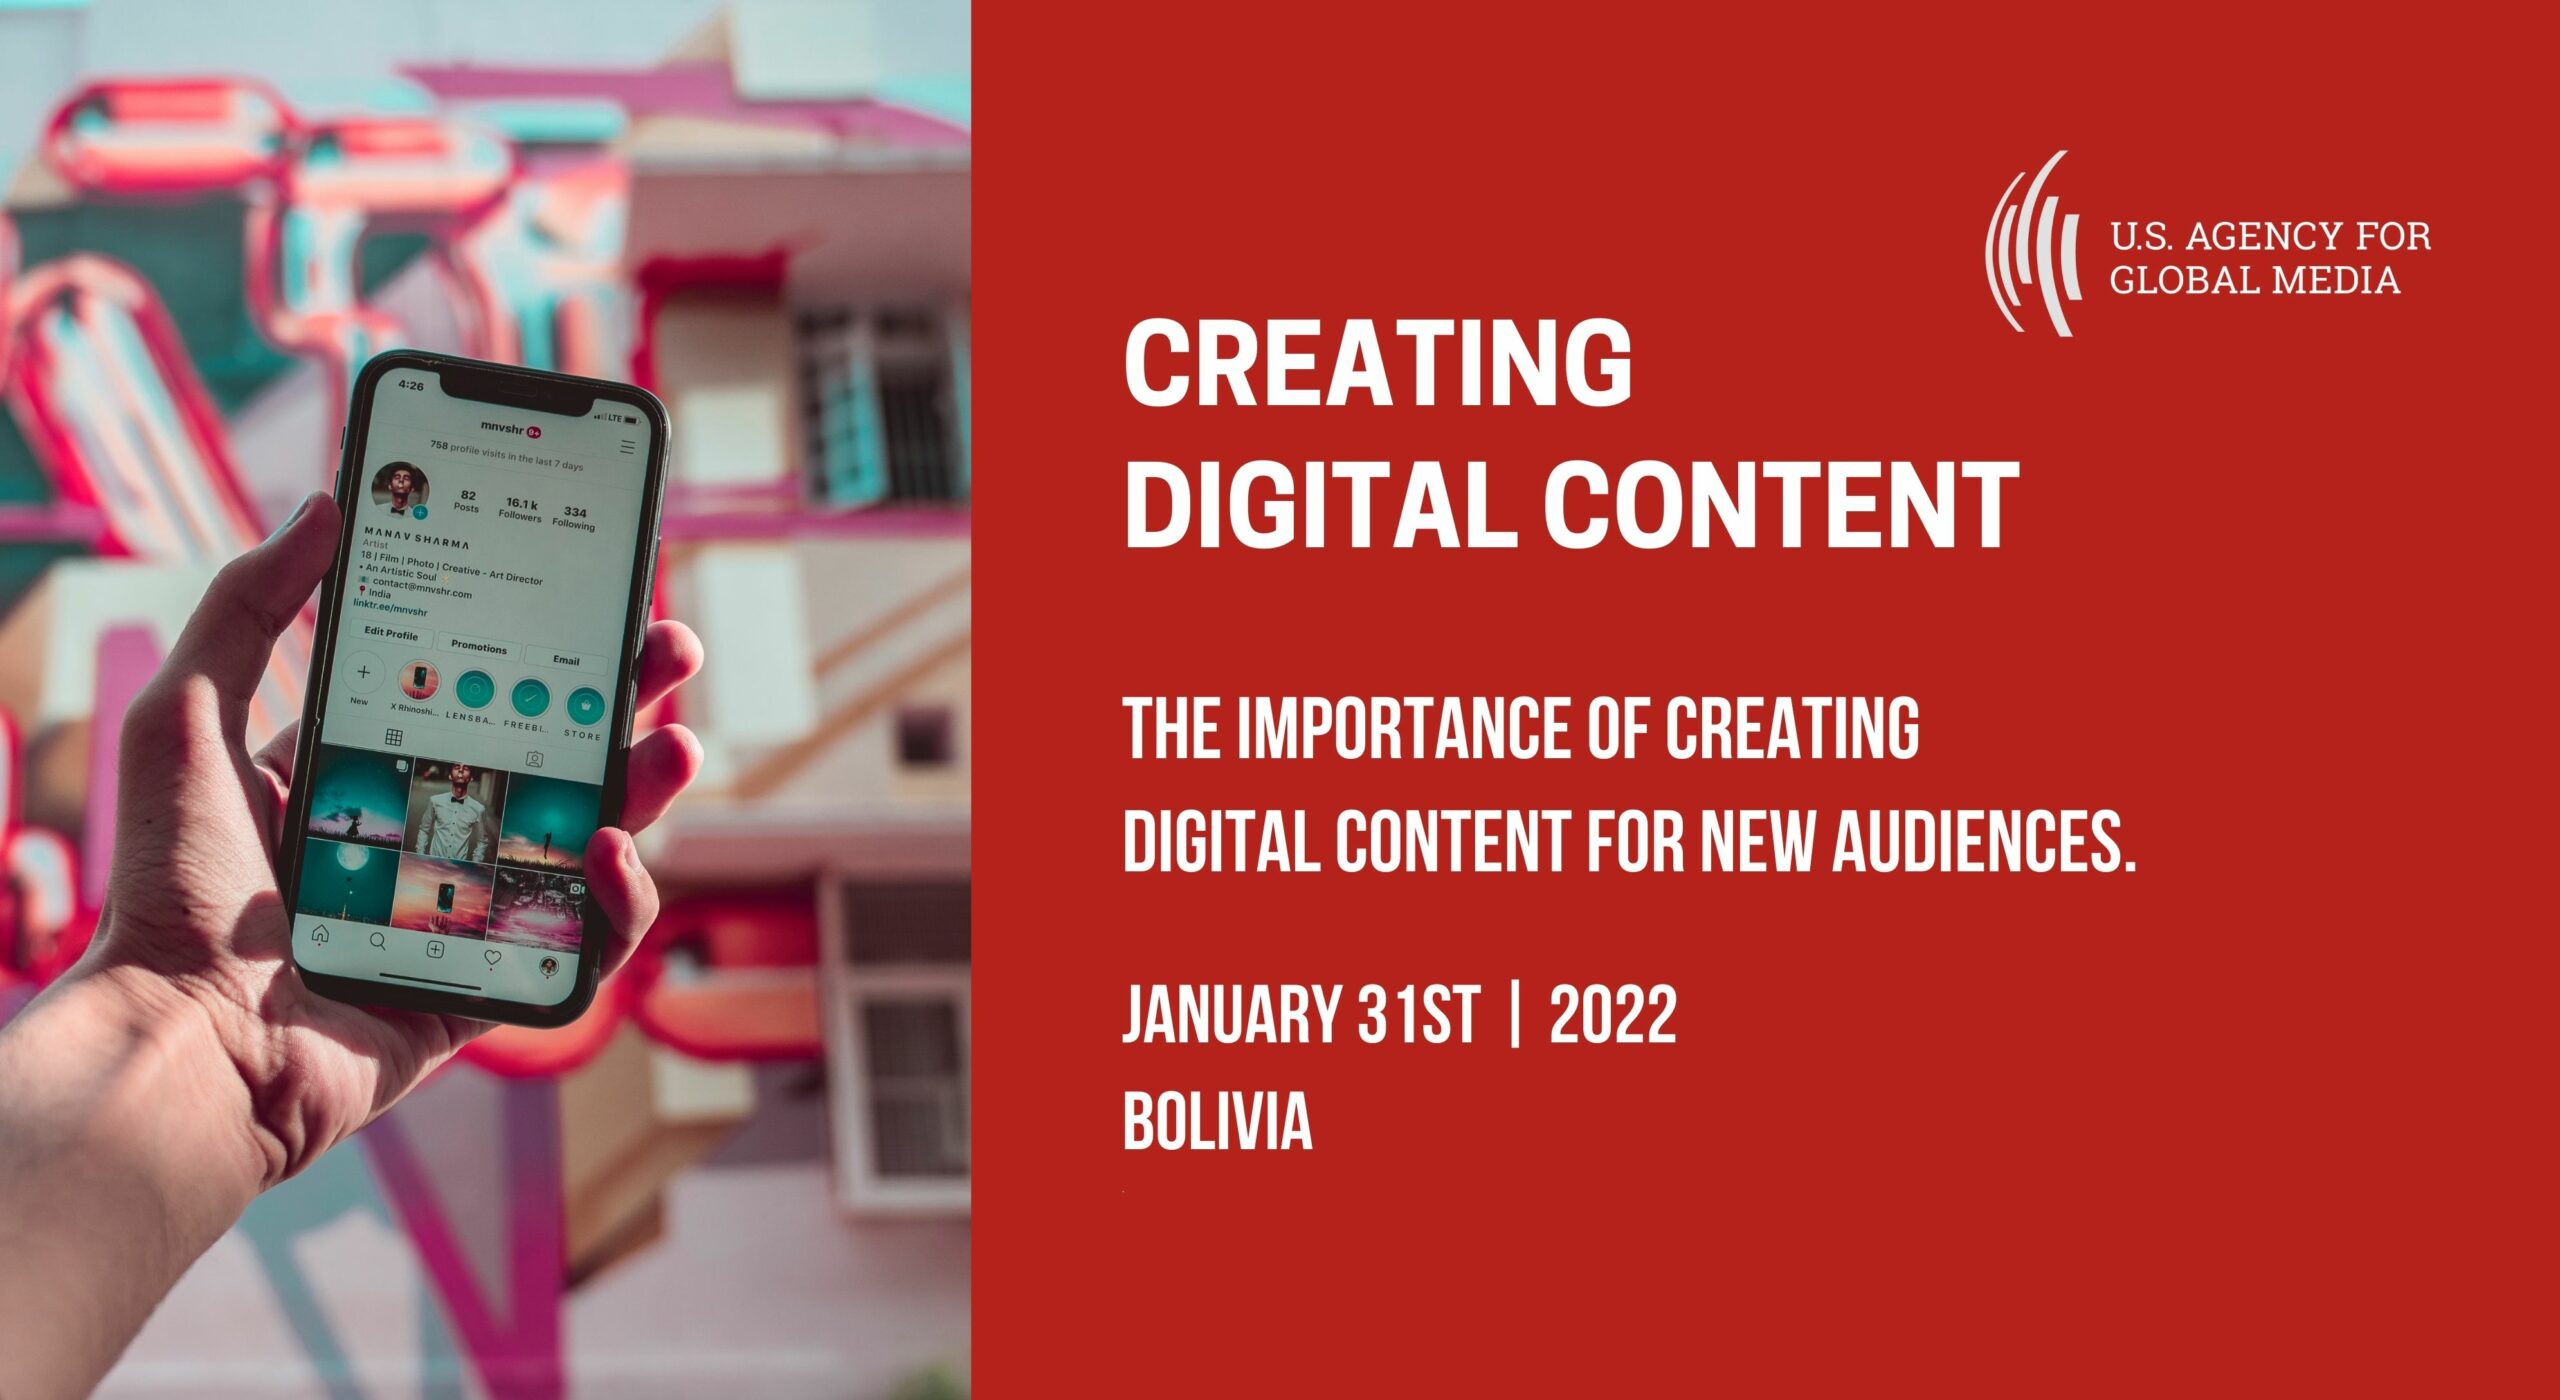 Bolivia: Creating Digital Content